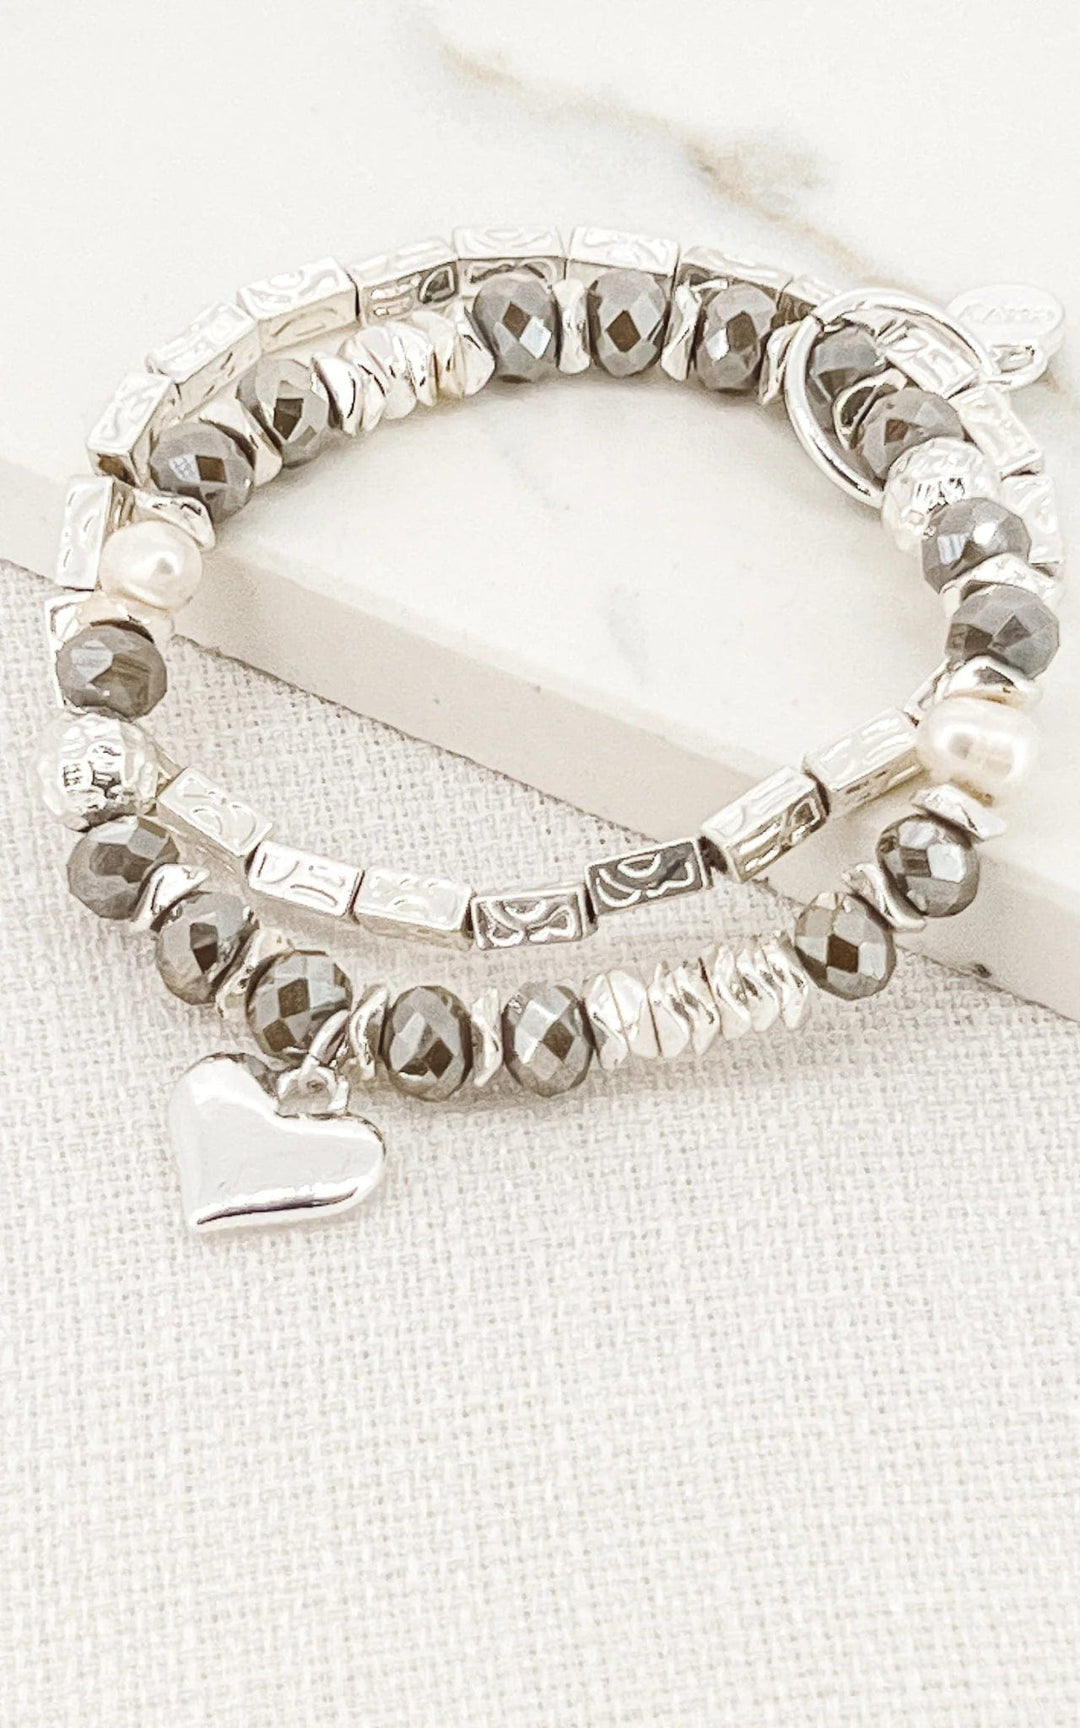 Envy Heart Pendant Bracelet In grey & Silver - Crabtree Cottage